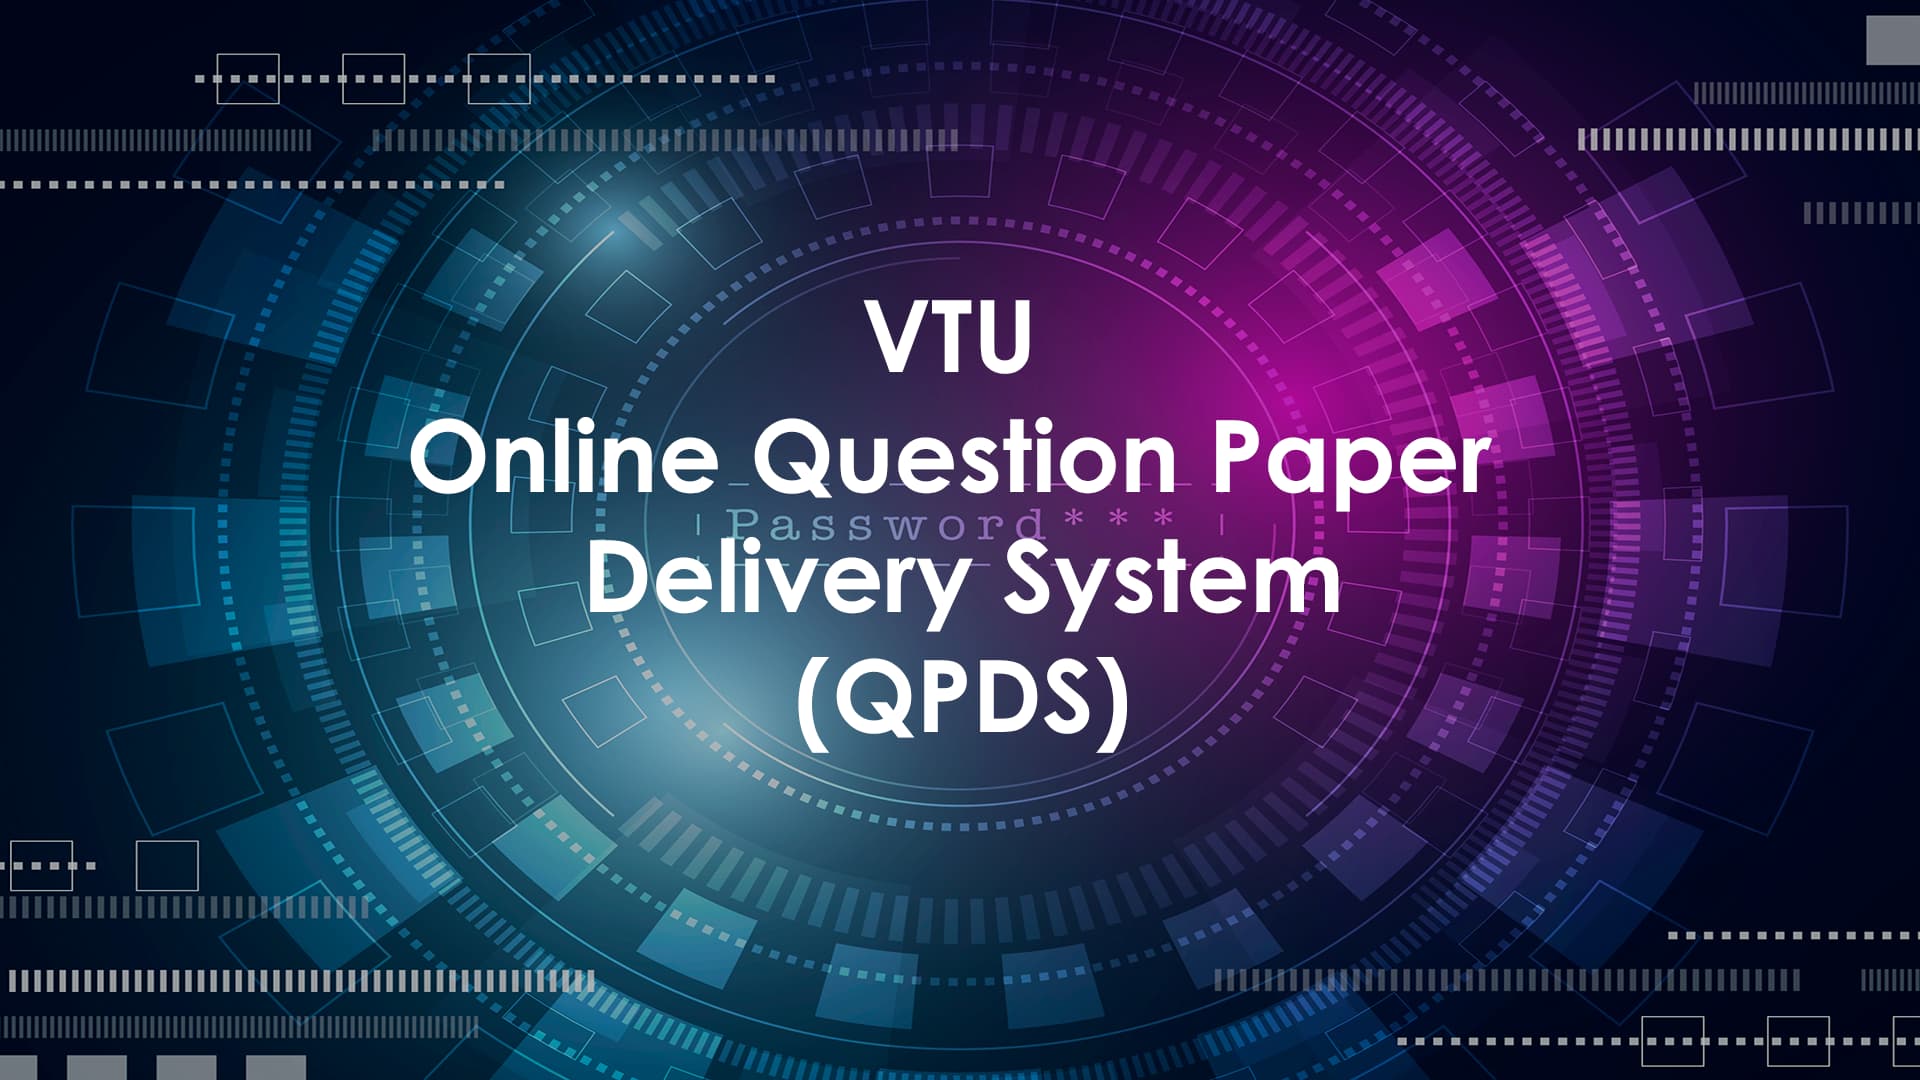 VTU Online Question Paper Delivery System (QPDS)